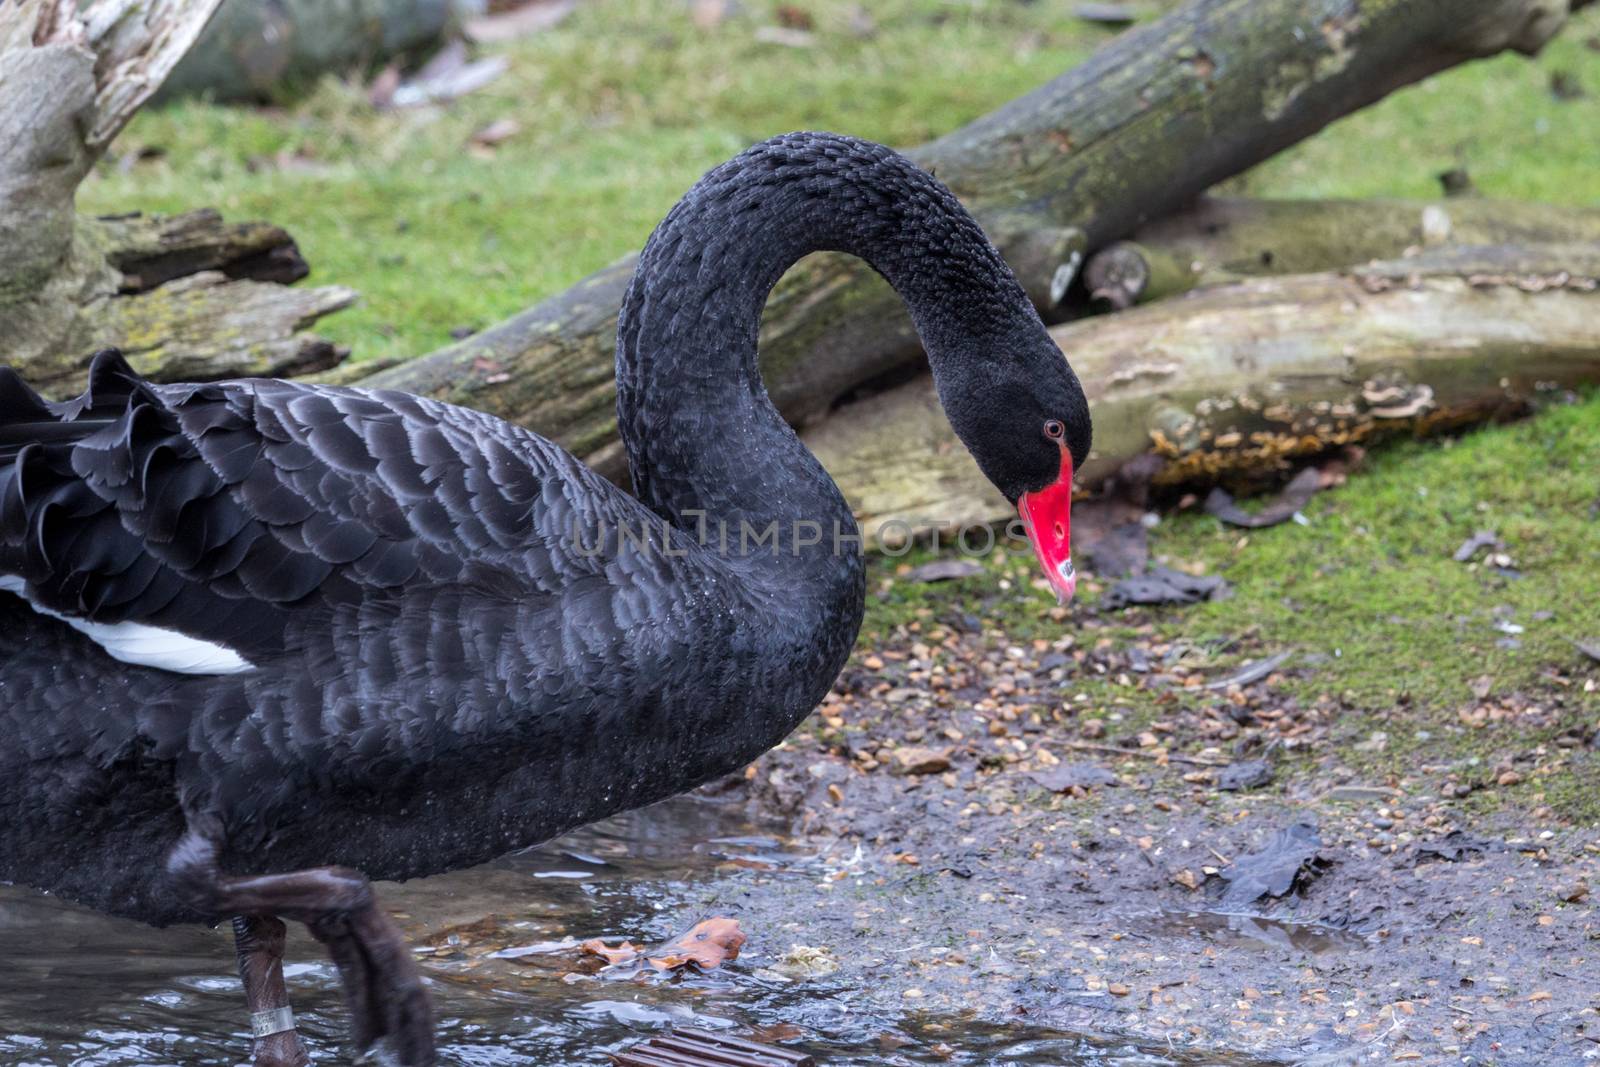 Black Swan, cygnus atratus, in the UK by magicbones